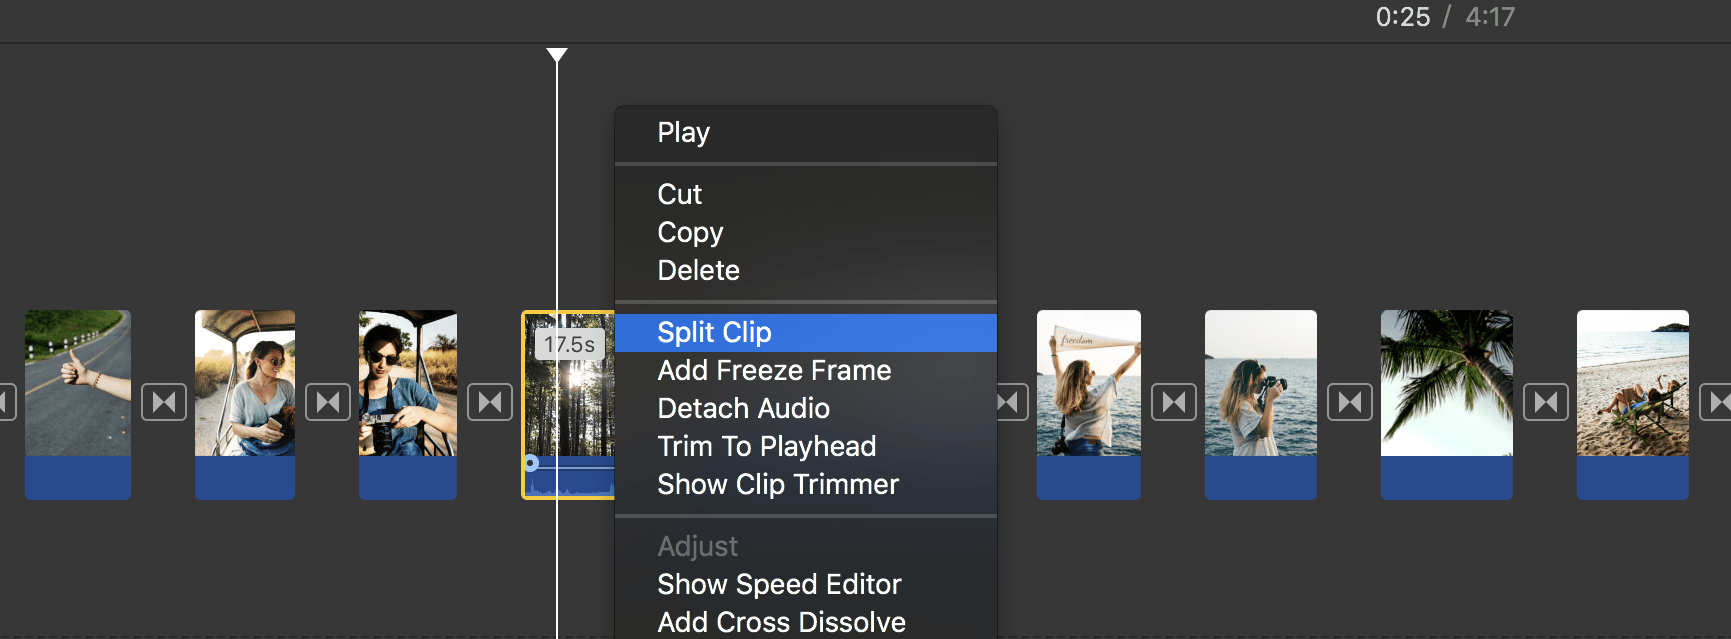 how to split video on imovie on mac